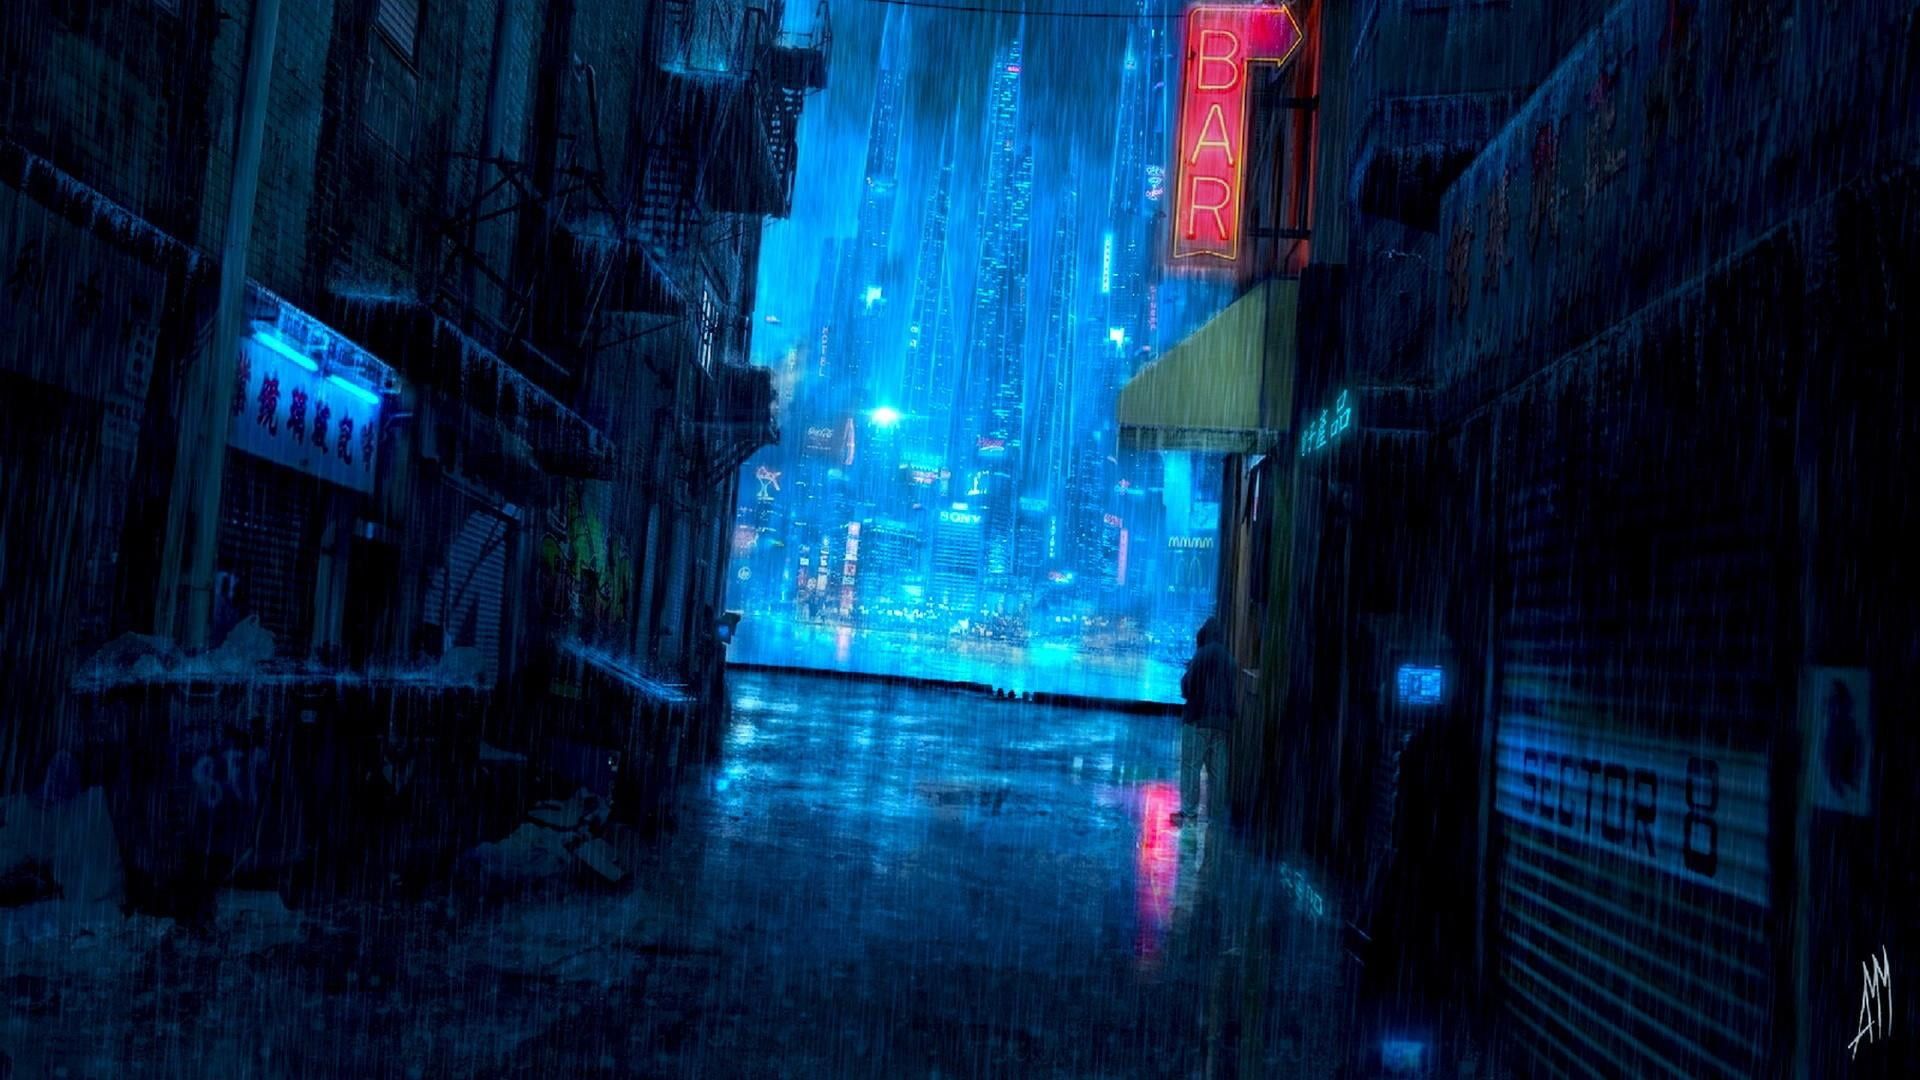 Anime City Rain Wallpapers Wallpaper Cave